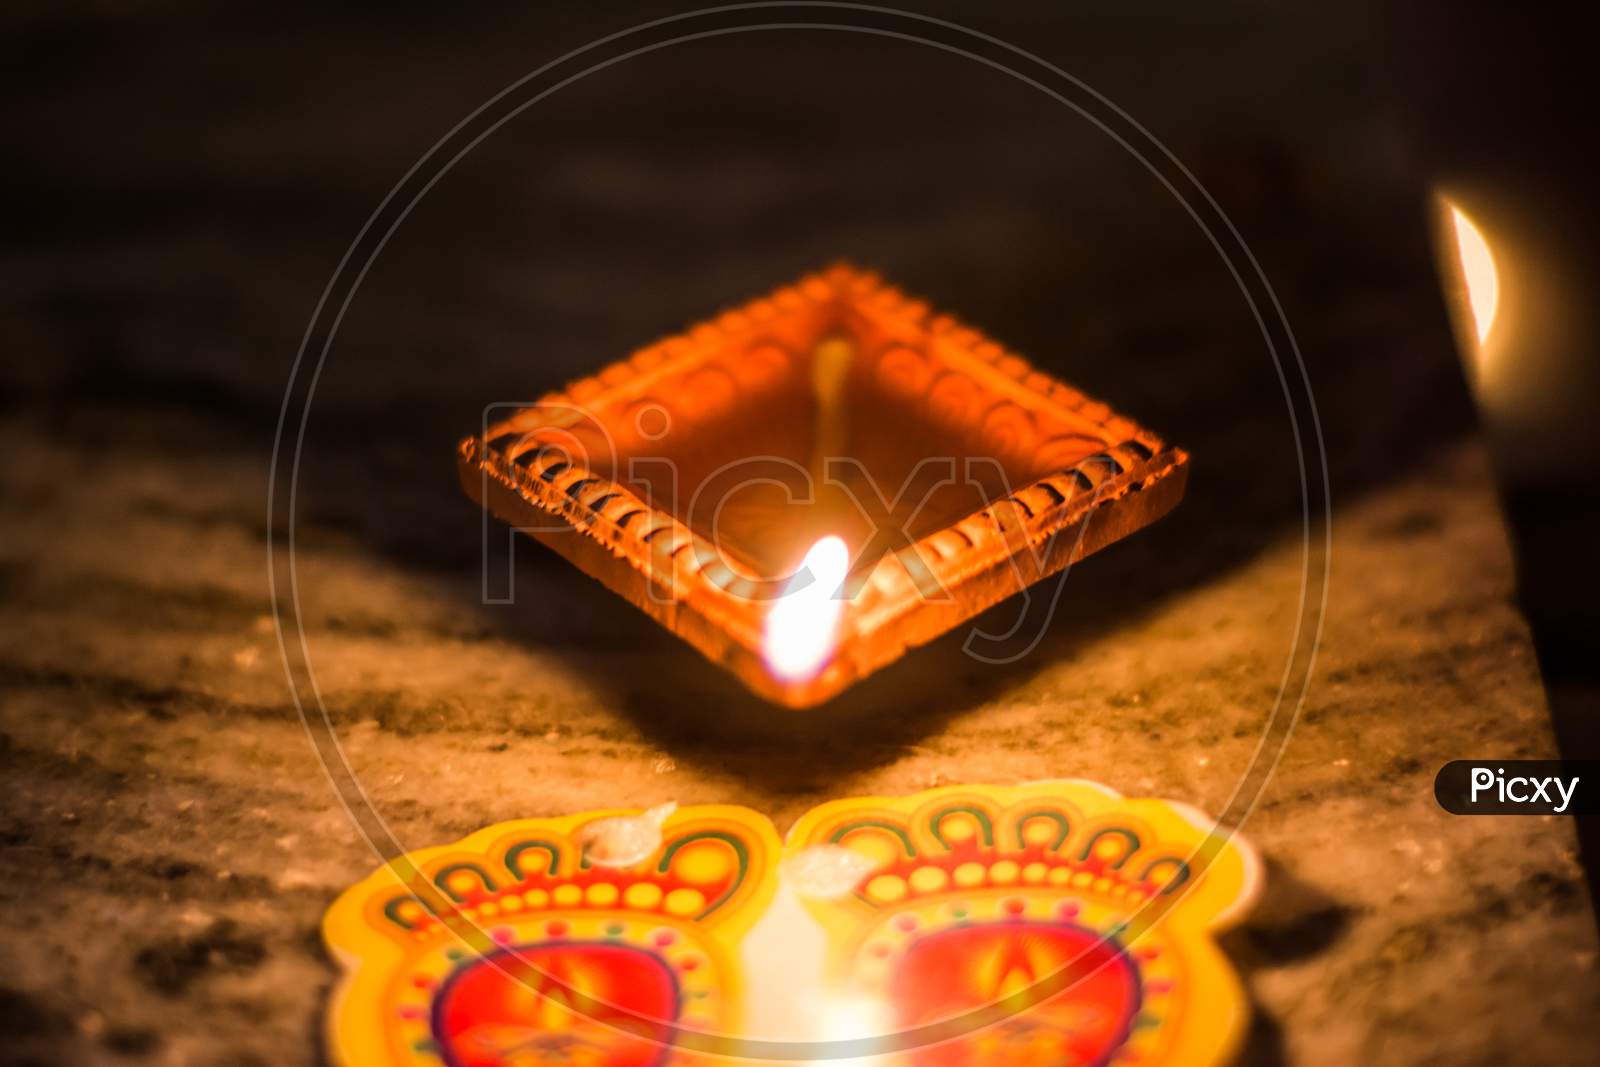 Happy Diwali - Colorful clay diya lamps lit during diwali celebration